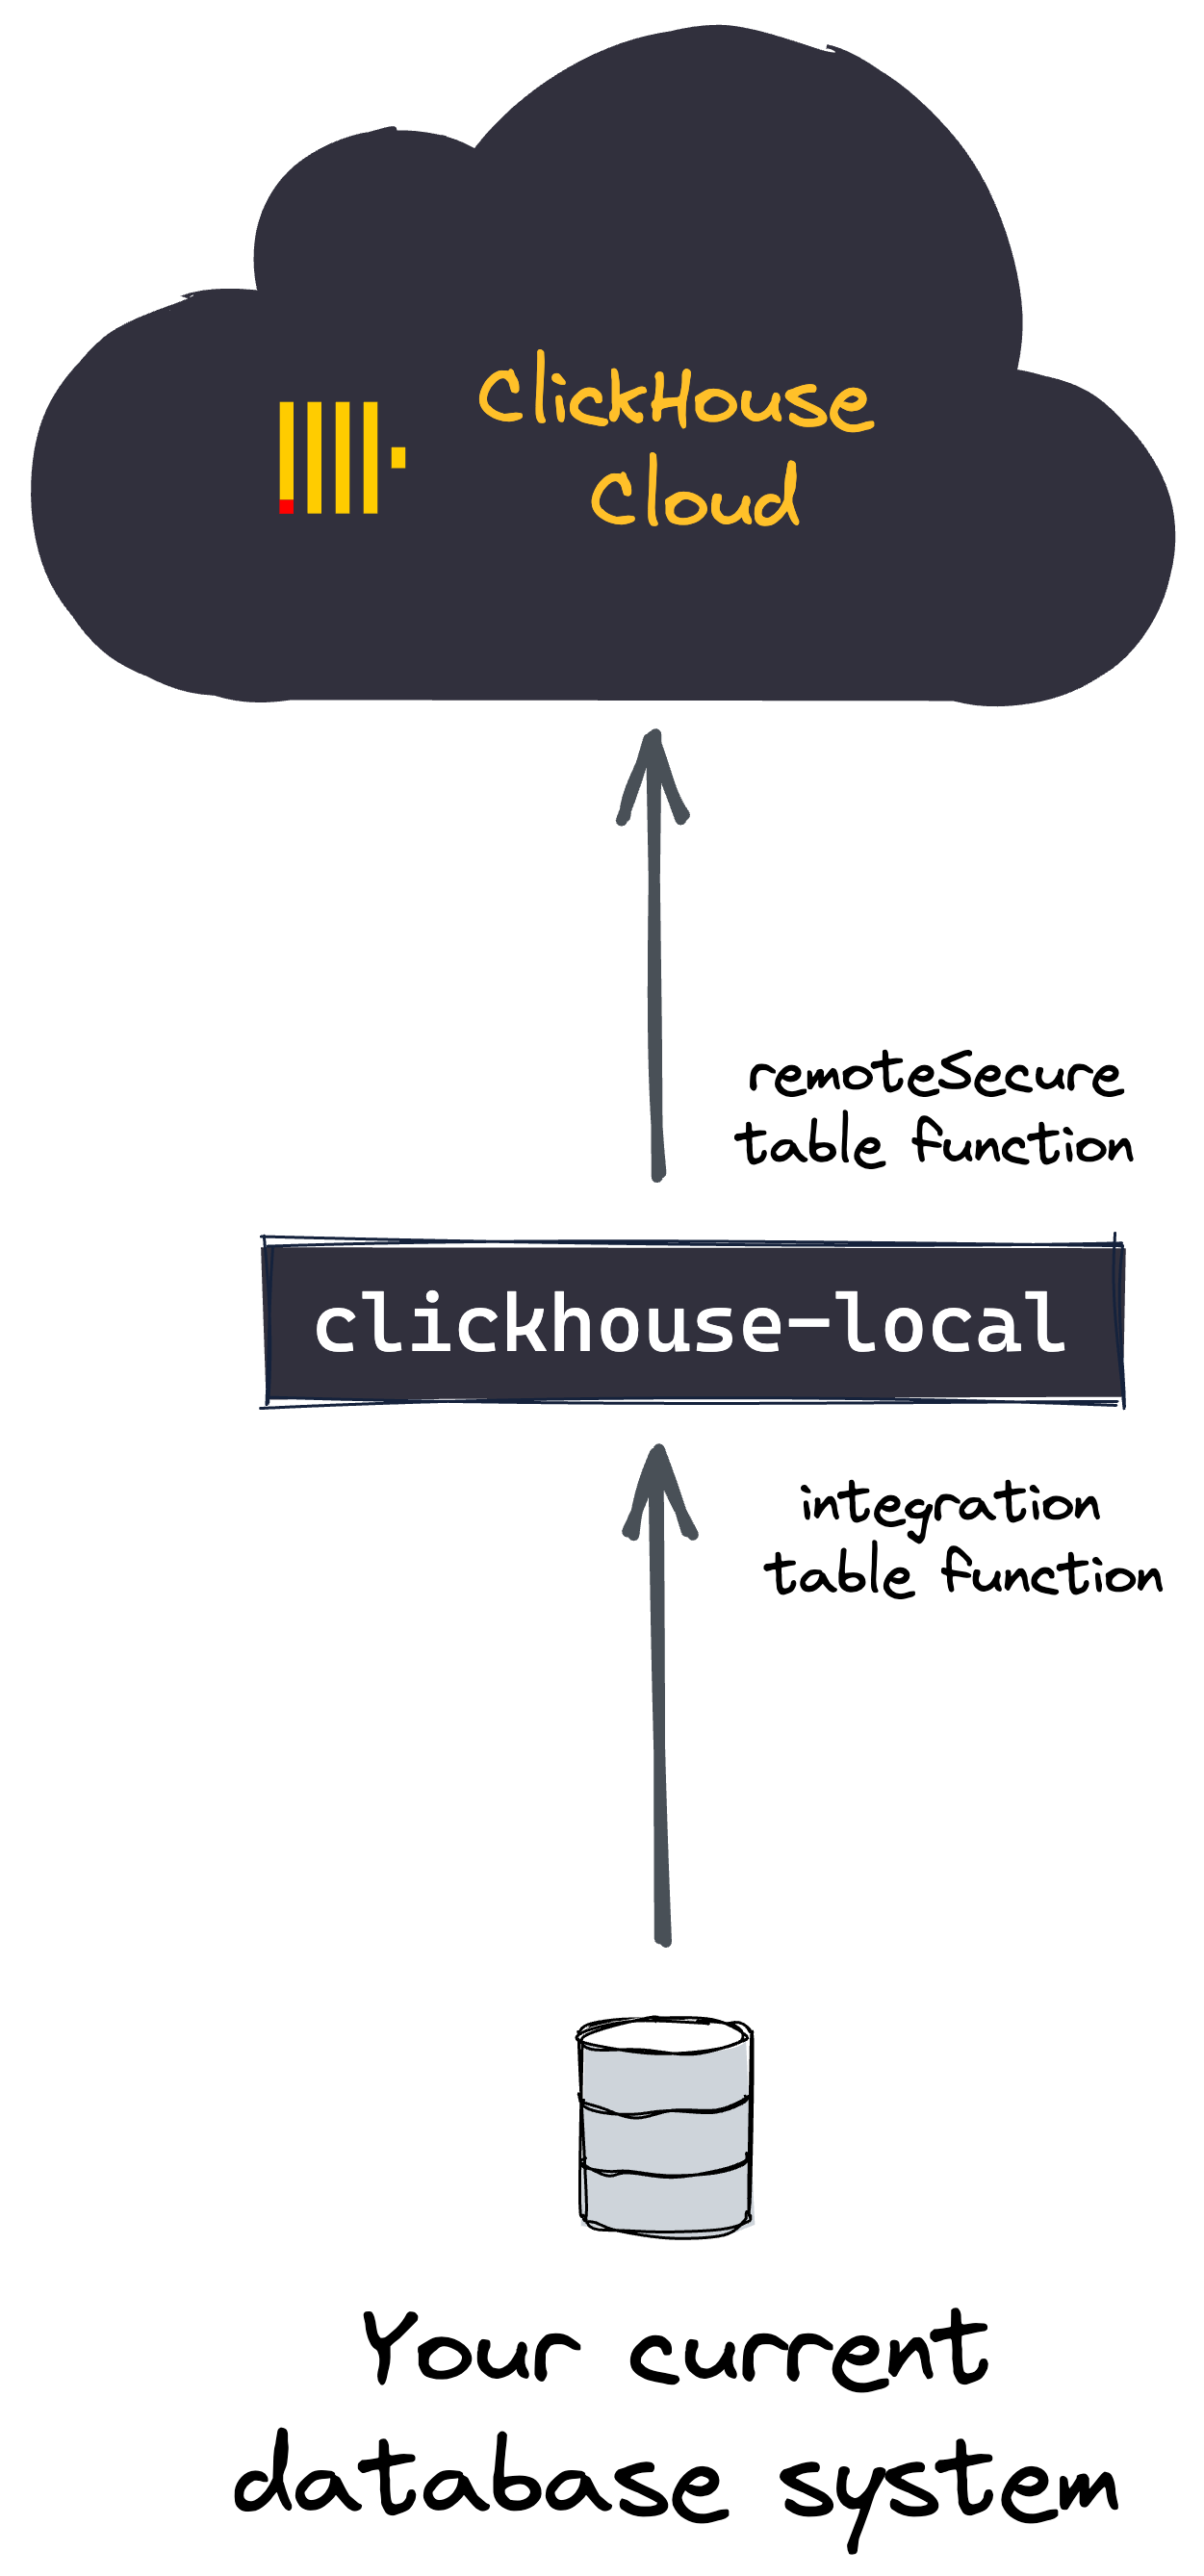 Migrating Self-managed ClickHouse